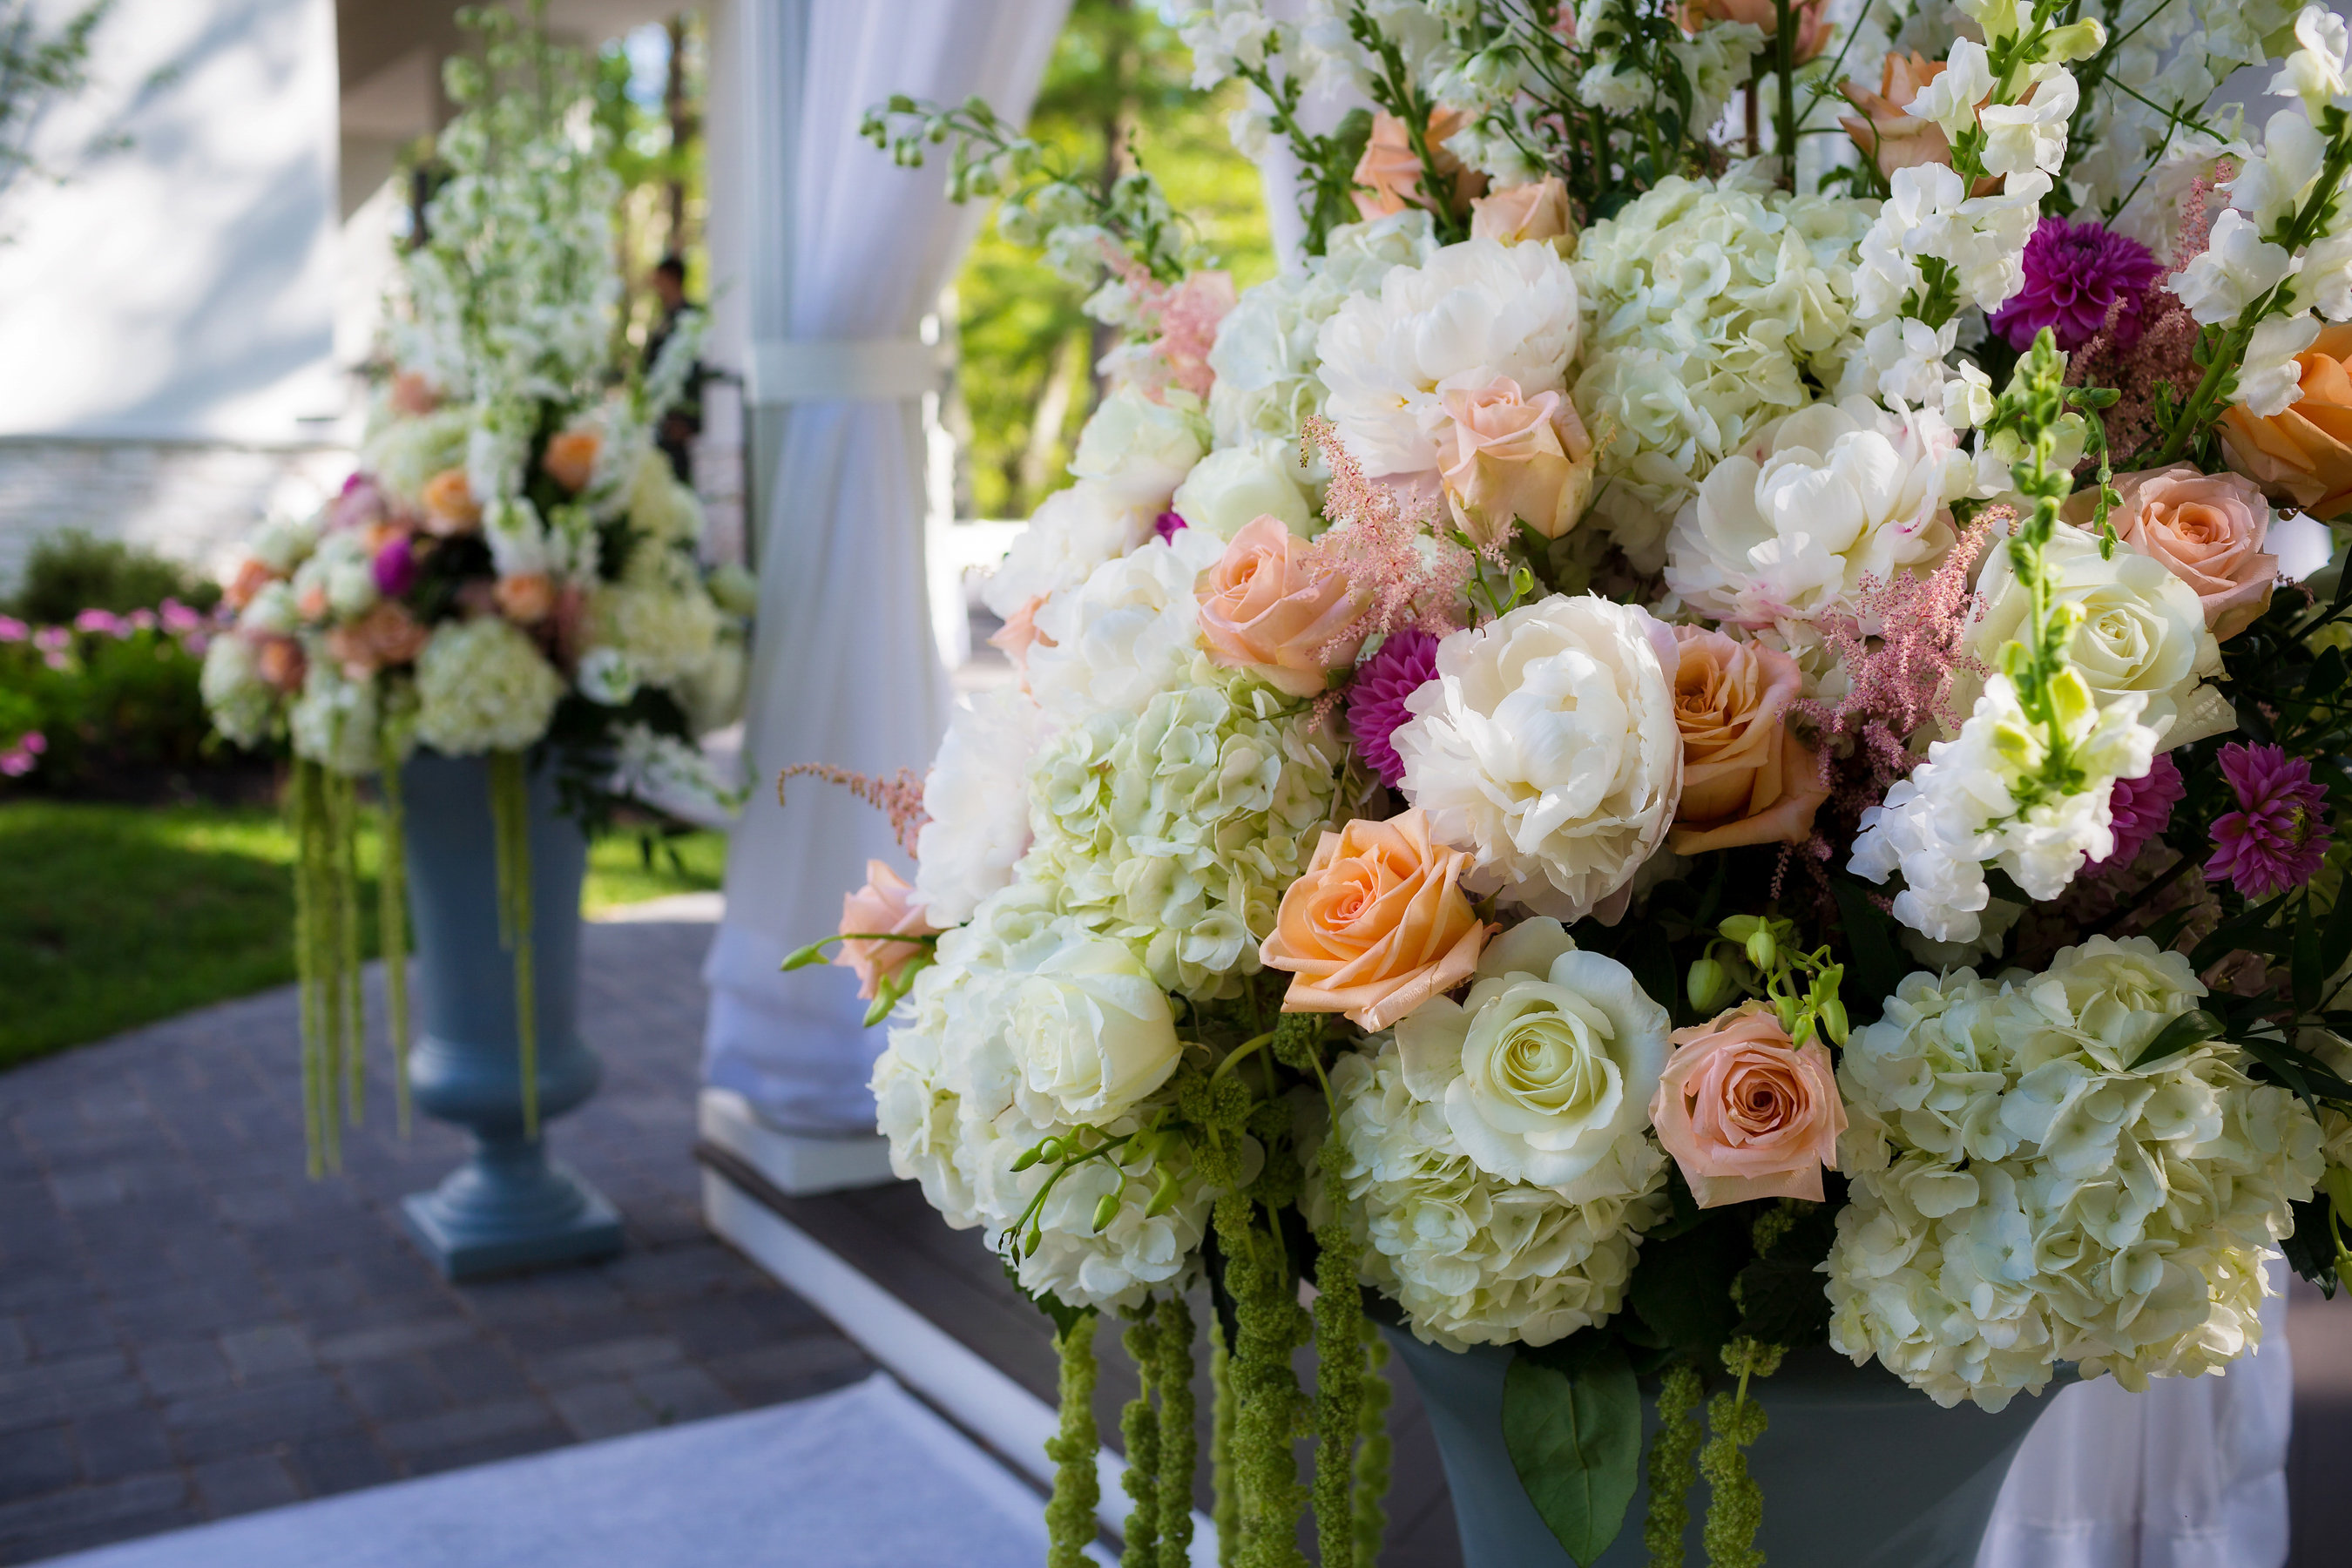 Wedding ceremony flowers designed by Stapleton Floral Design